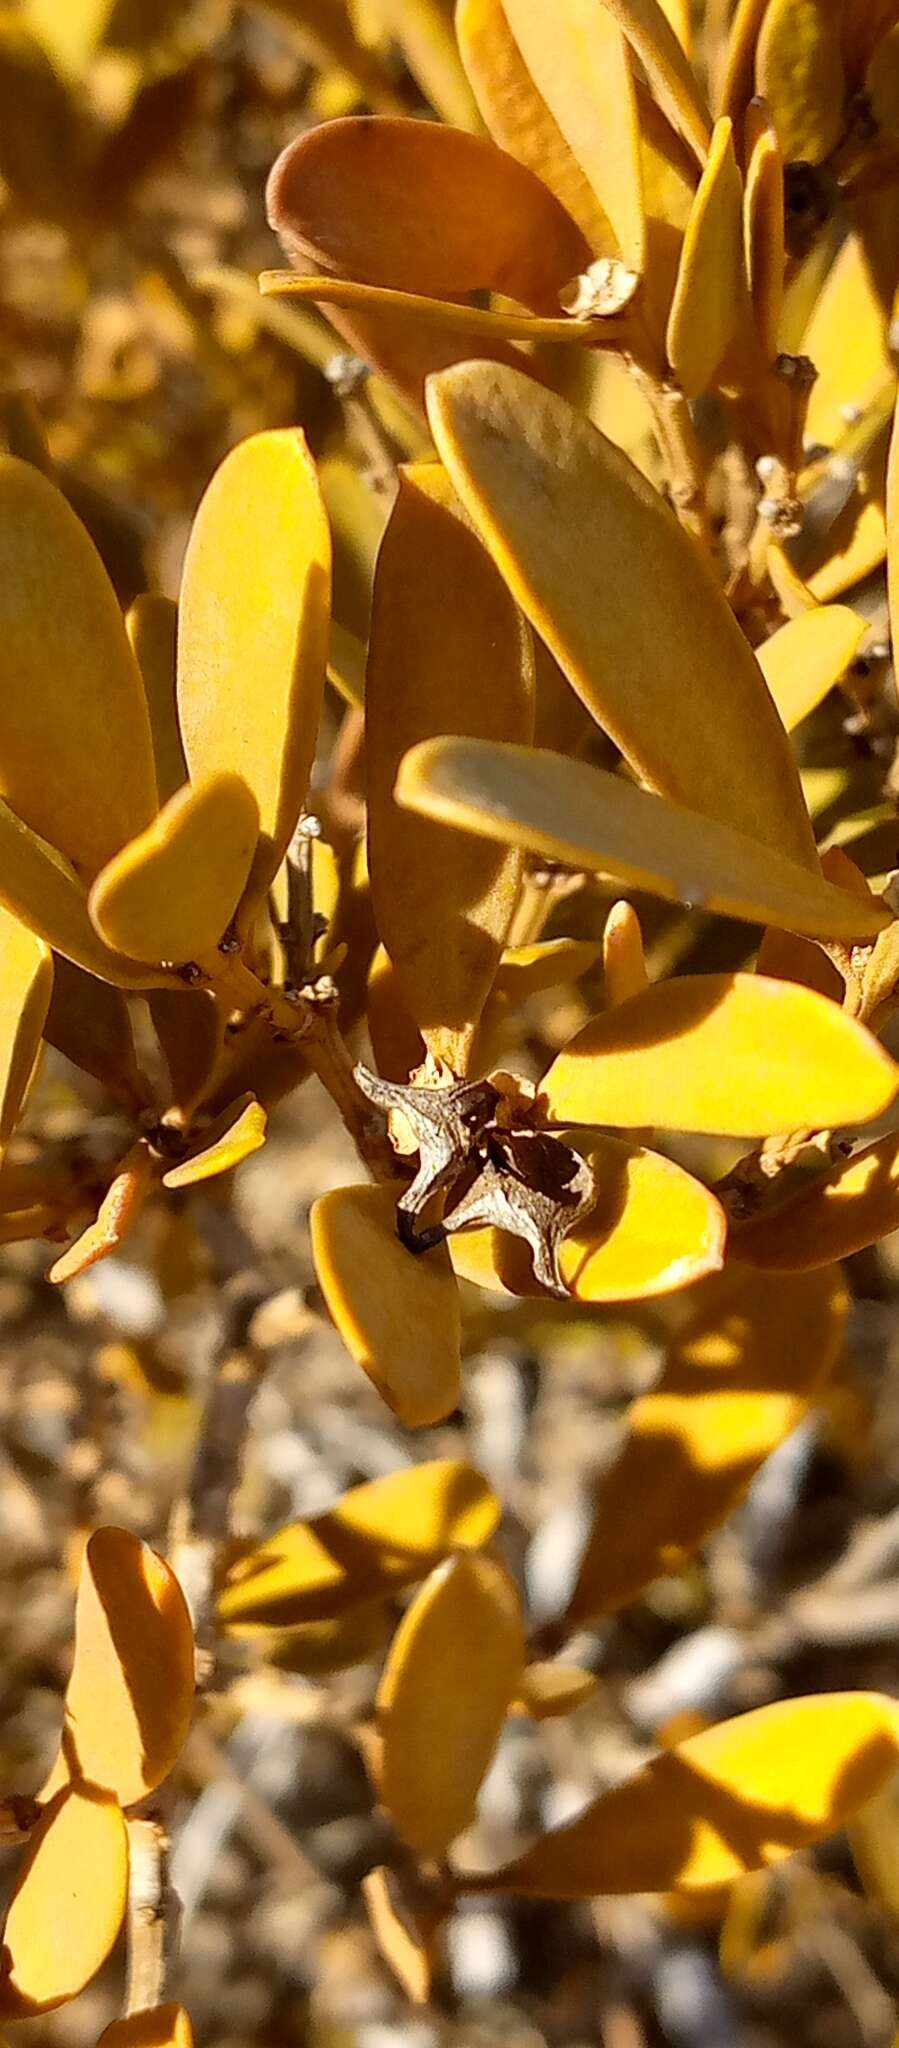 Sivun Buxus madagascarica Baill. kuva